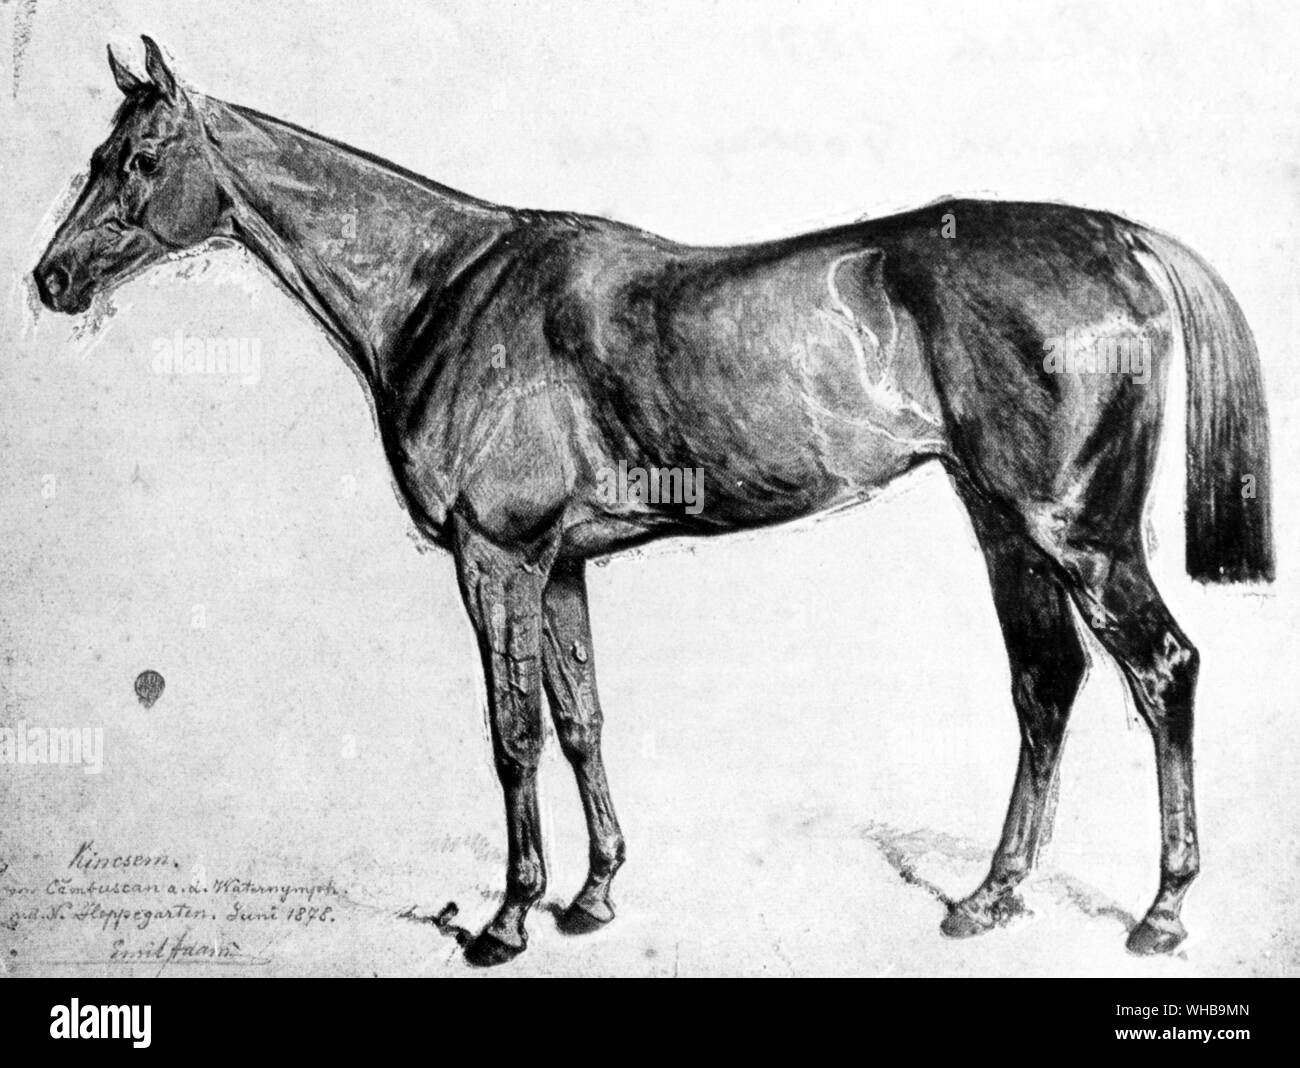 Kinscem 1878 Hungarian Jockey Club Stock Photo